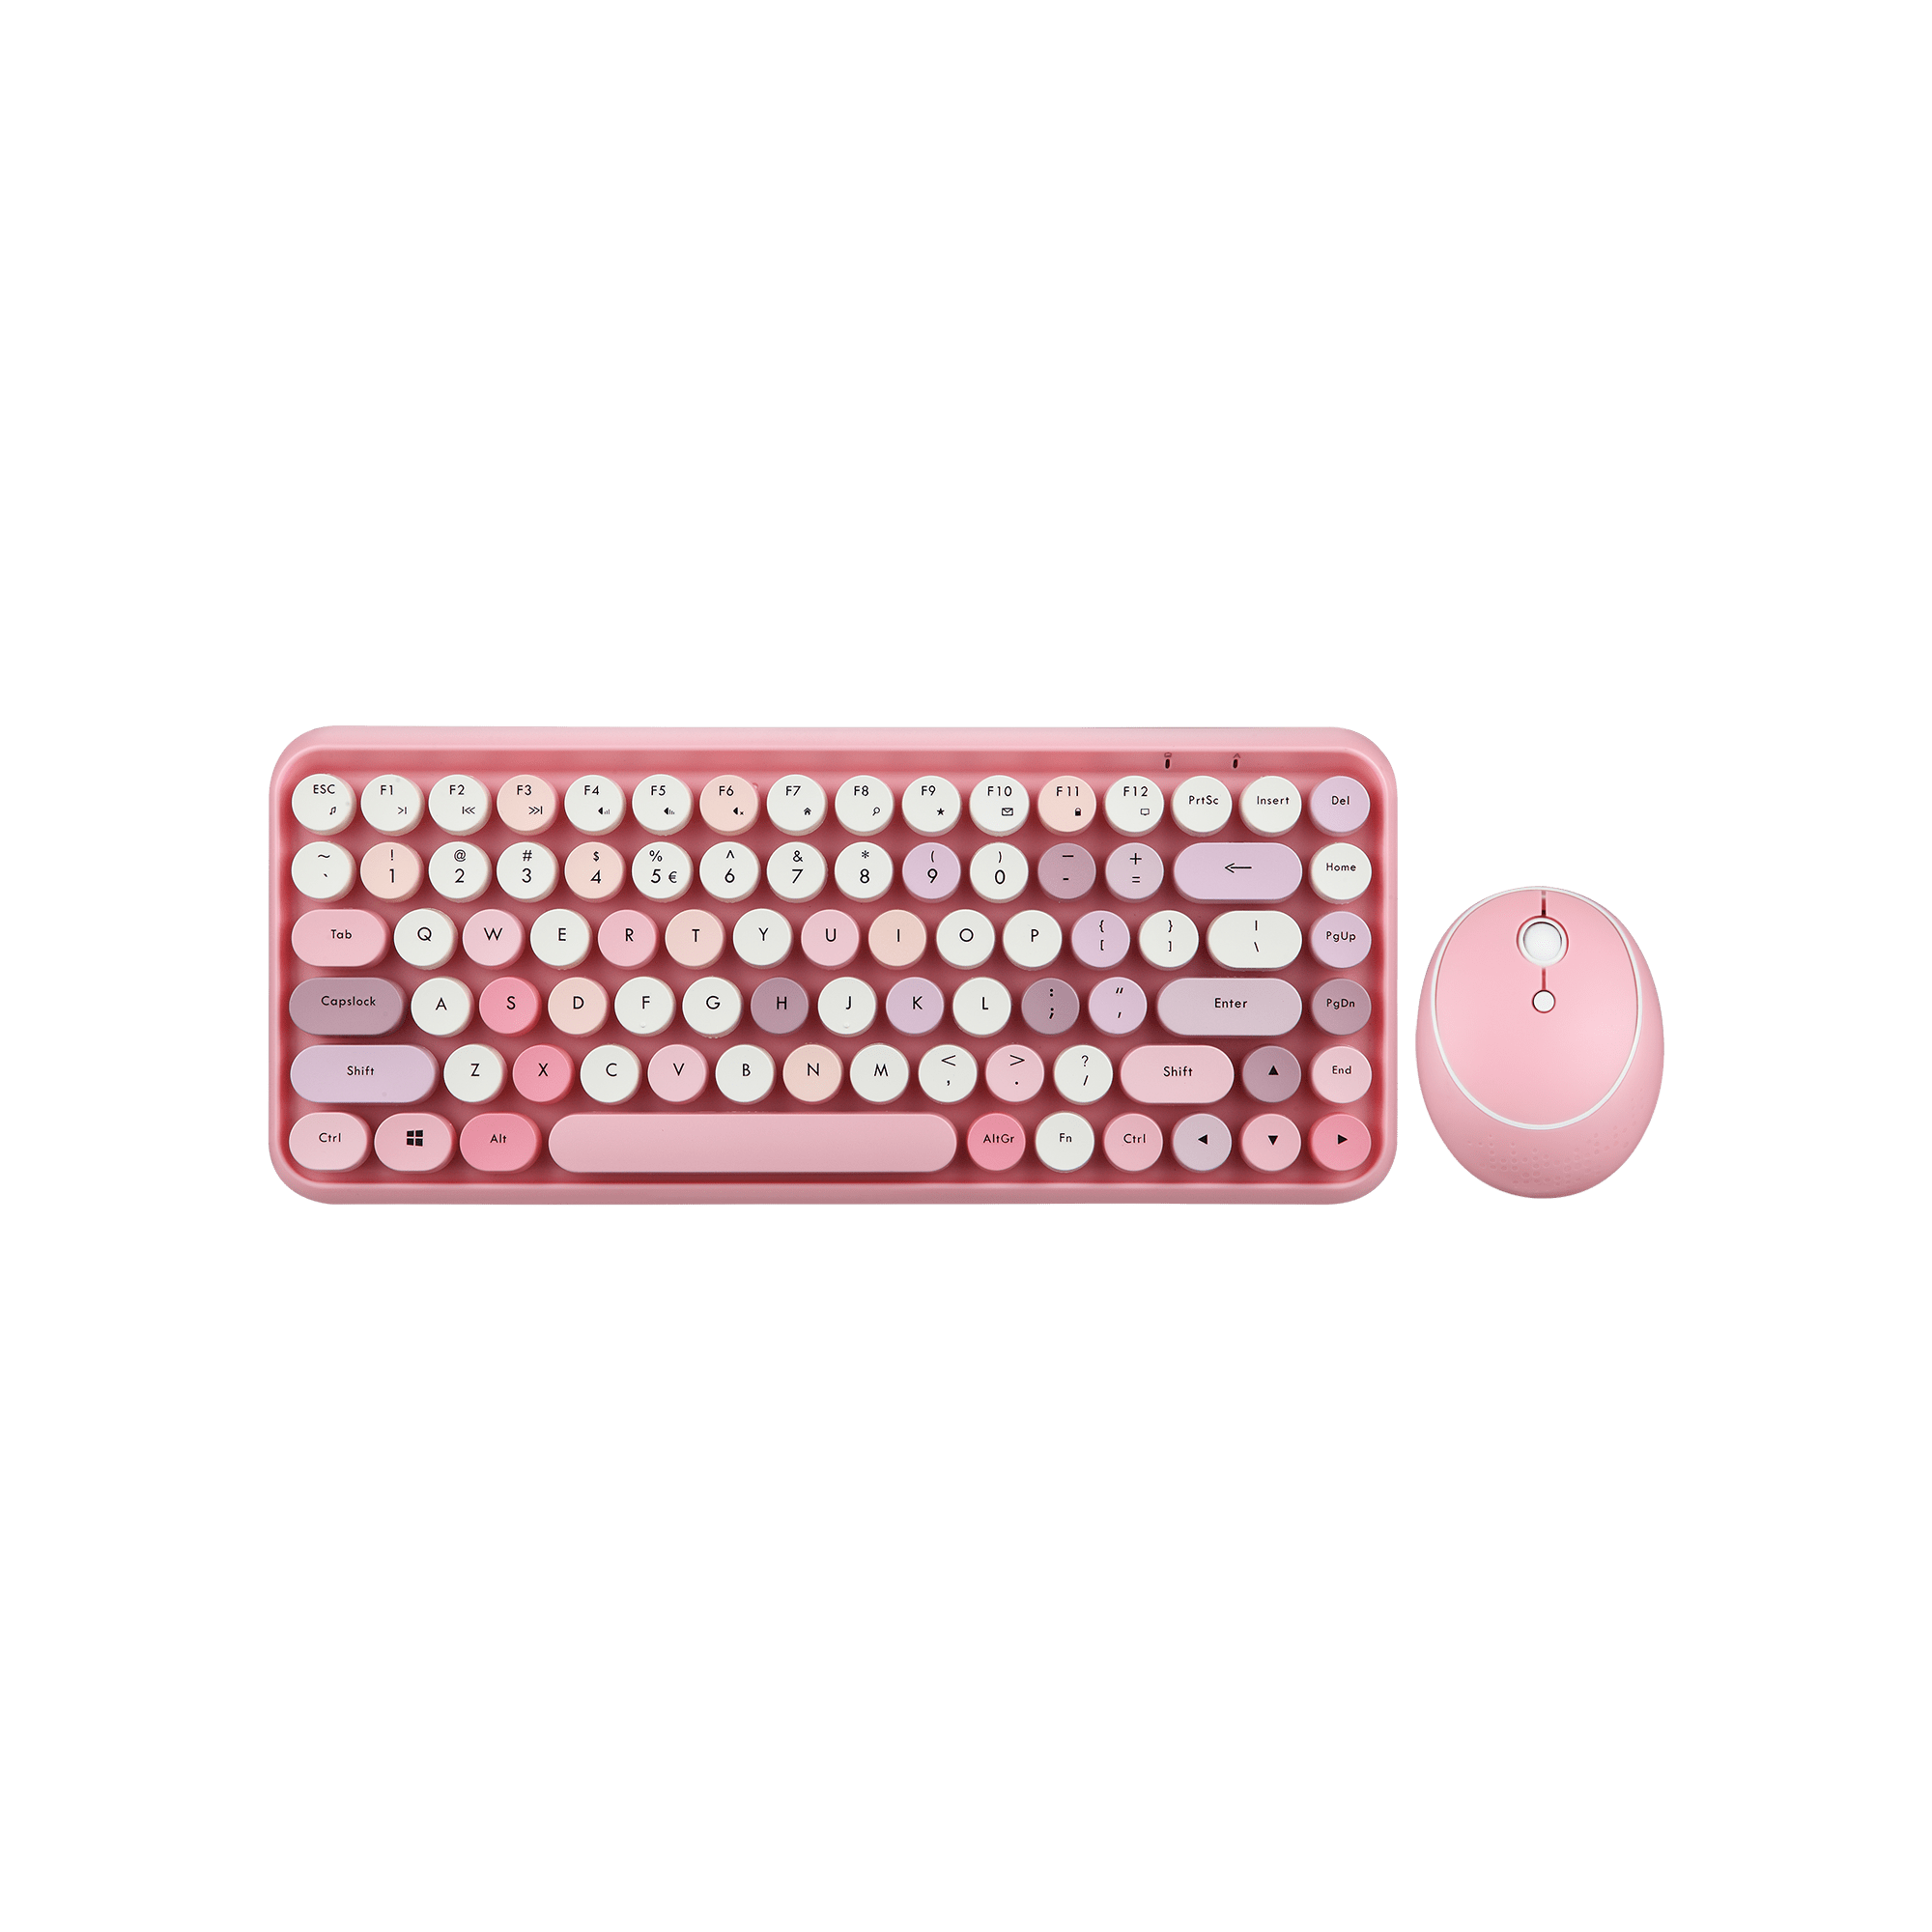 PERIDUO-713 PK - Wireless Vintage Pink Mini Combo (75% Keyboard) - Perixx Europe